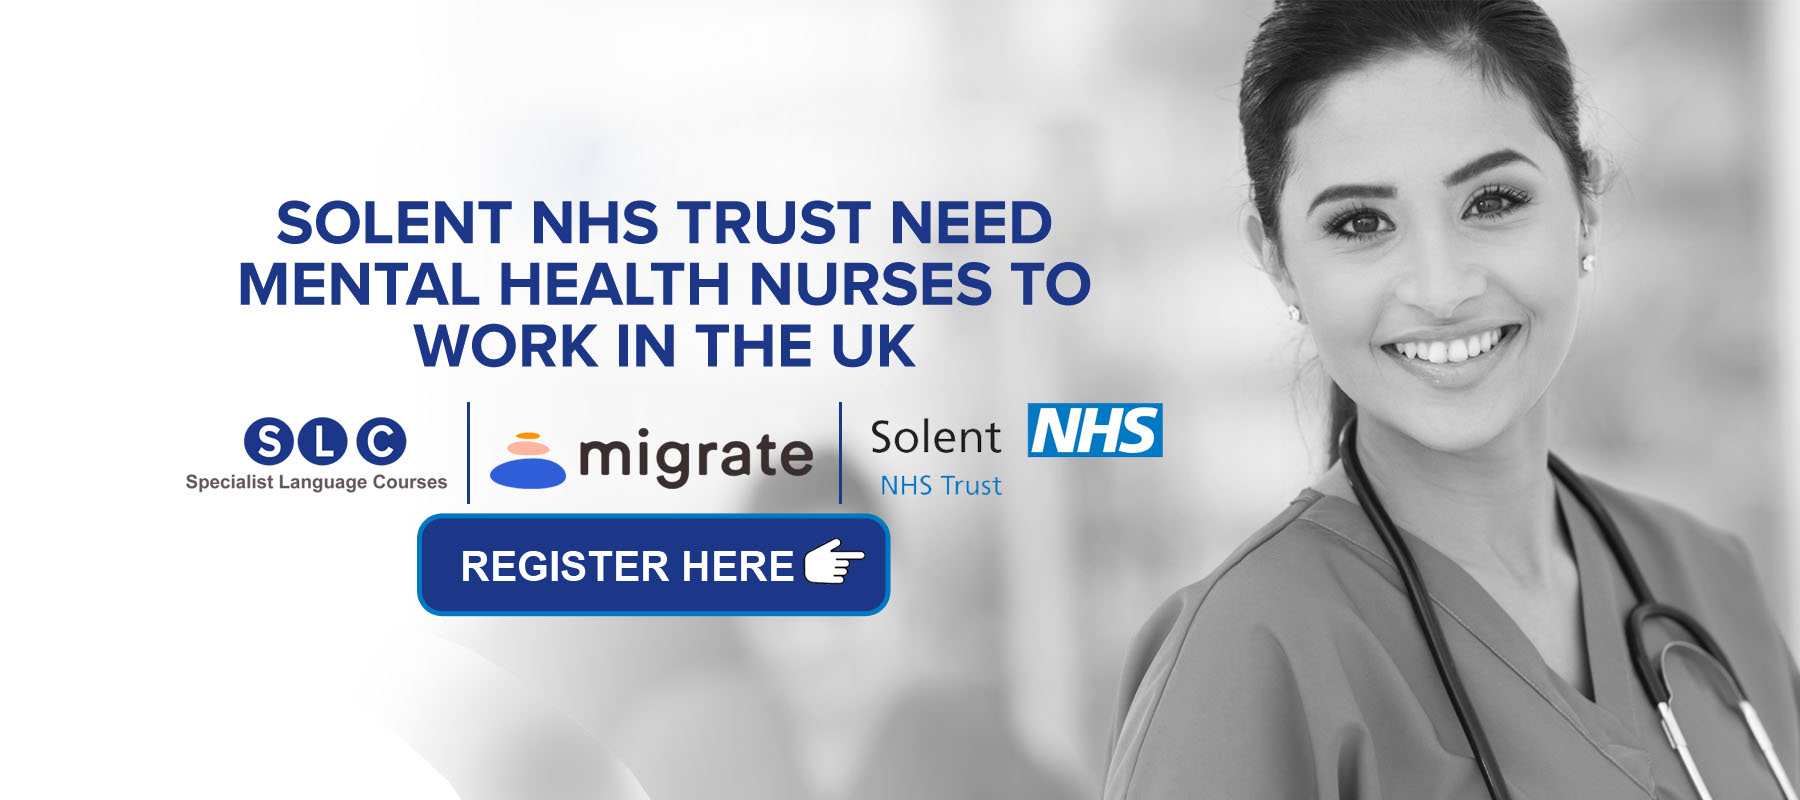 Solent NHS trust need mental health nurses to work in the UK